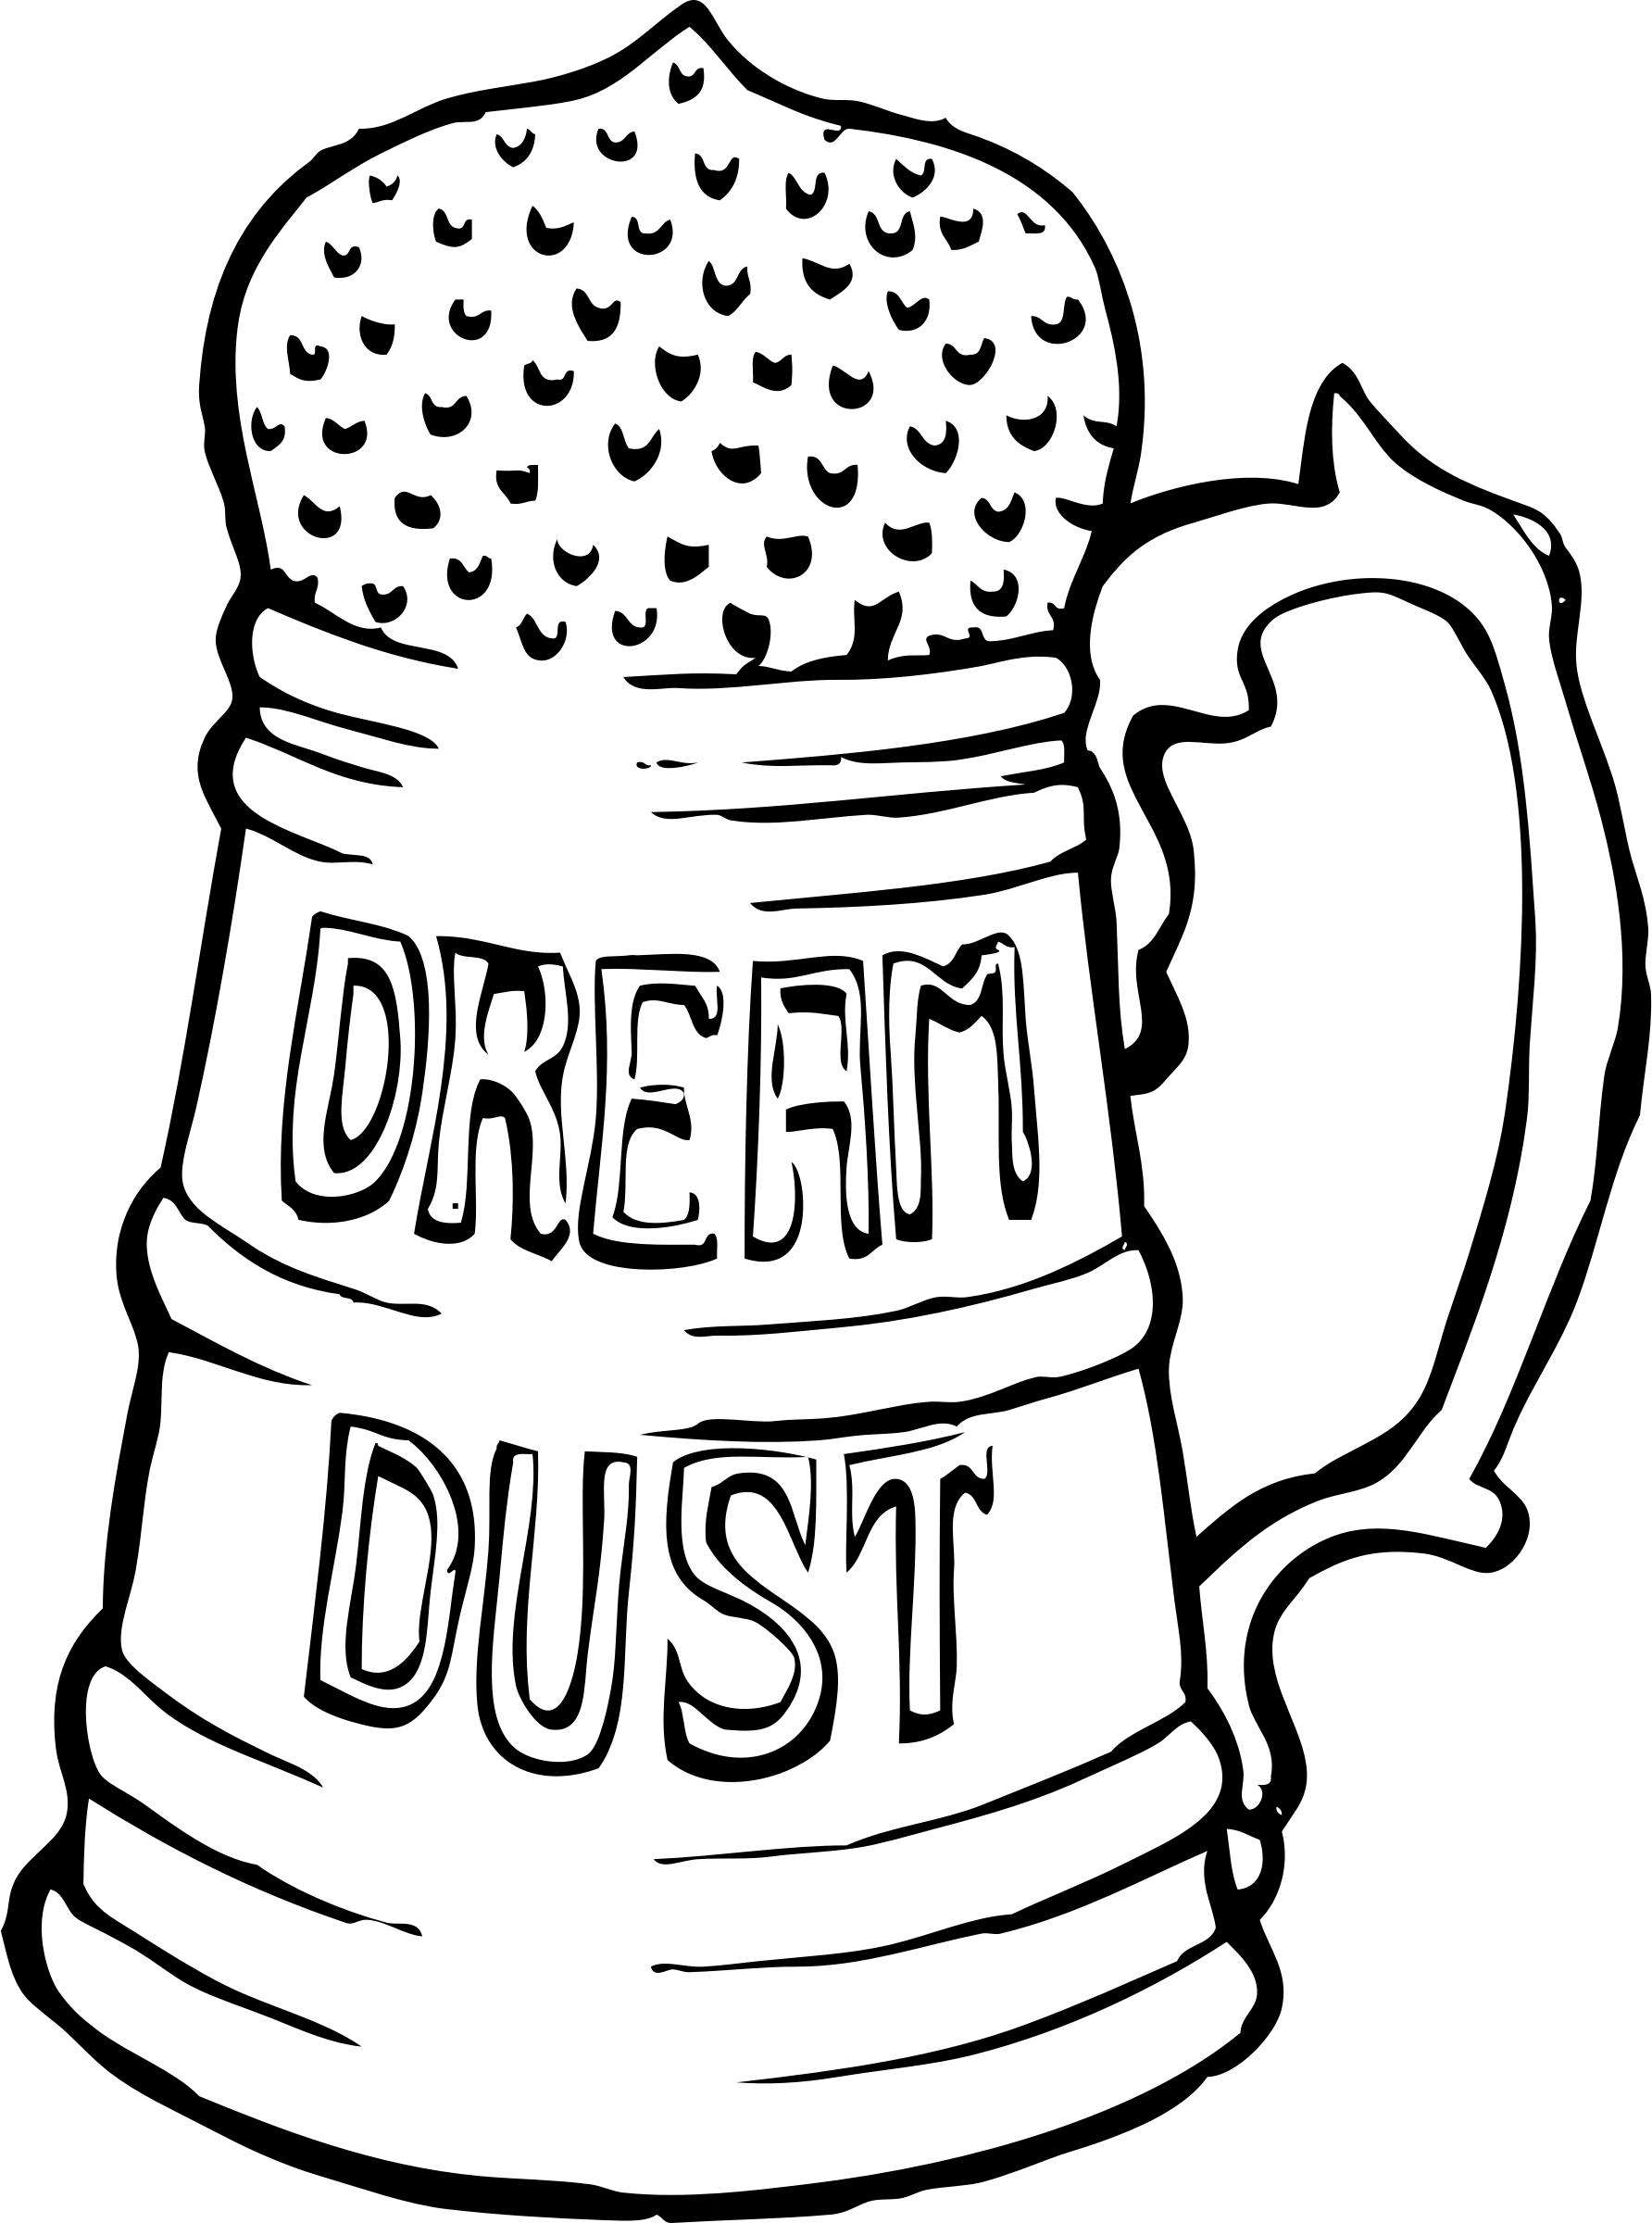 dream dust icons